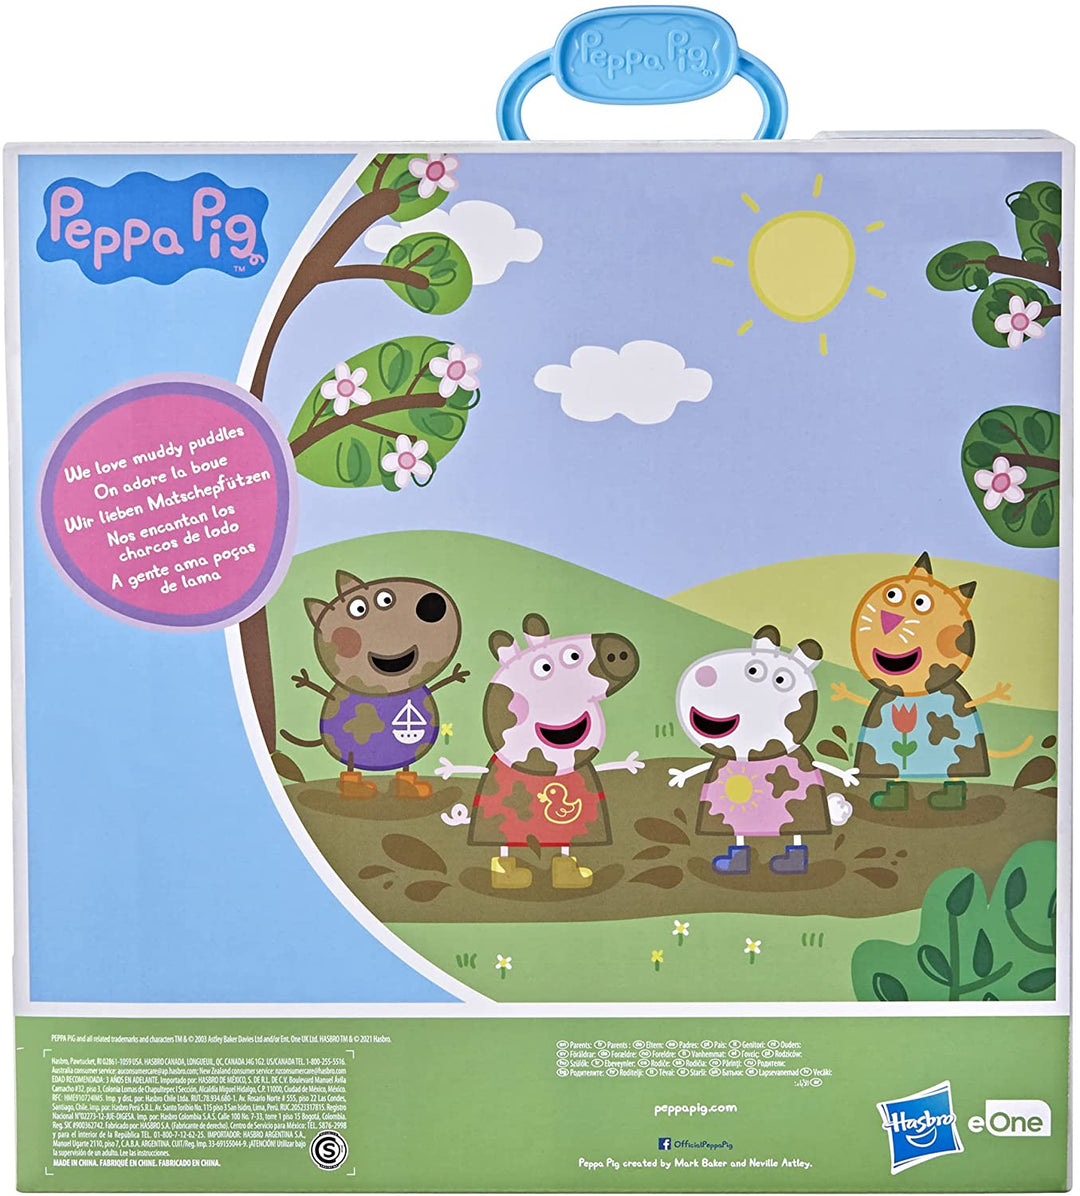 Peppa Pig Peppa&#39;s Adventures Peppa&#39;s Carry-Along Friends Estuche de juguete